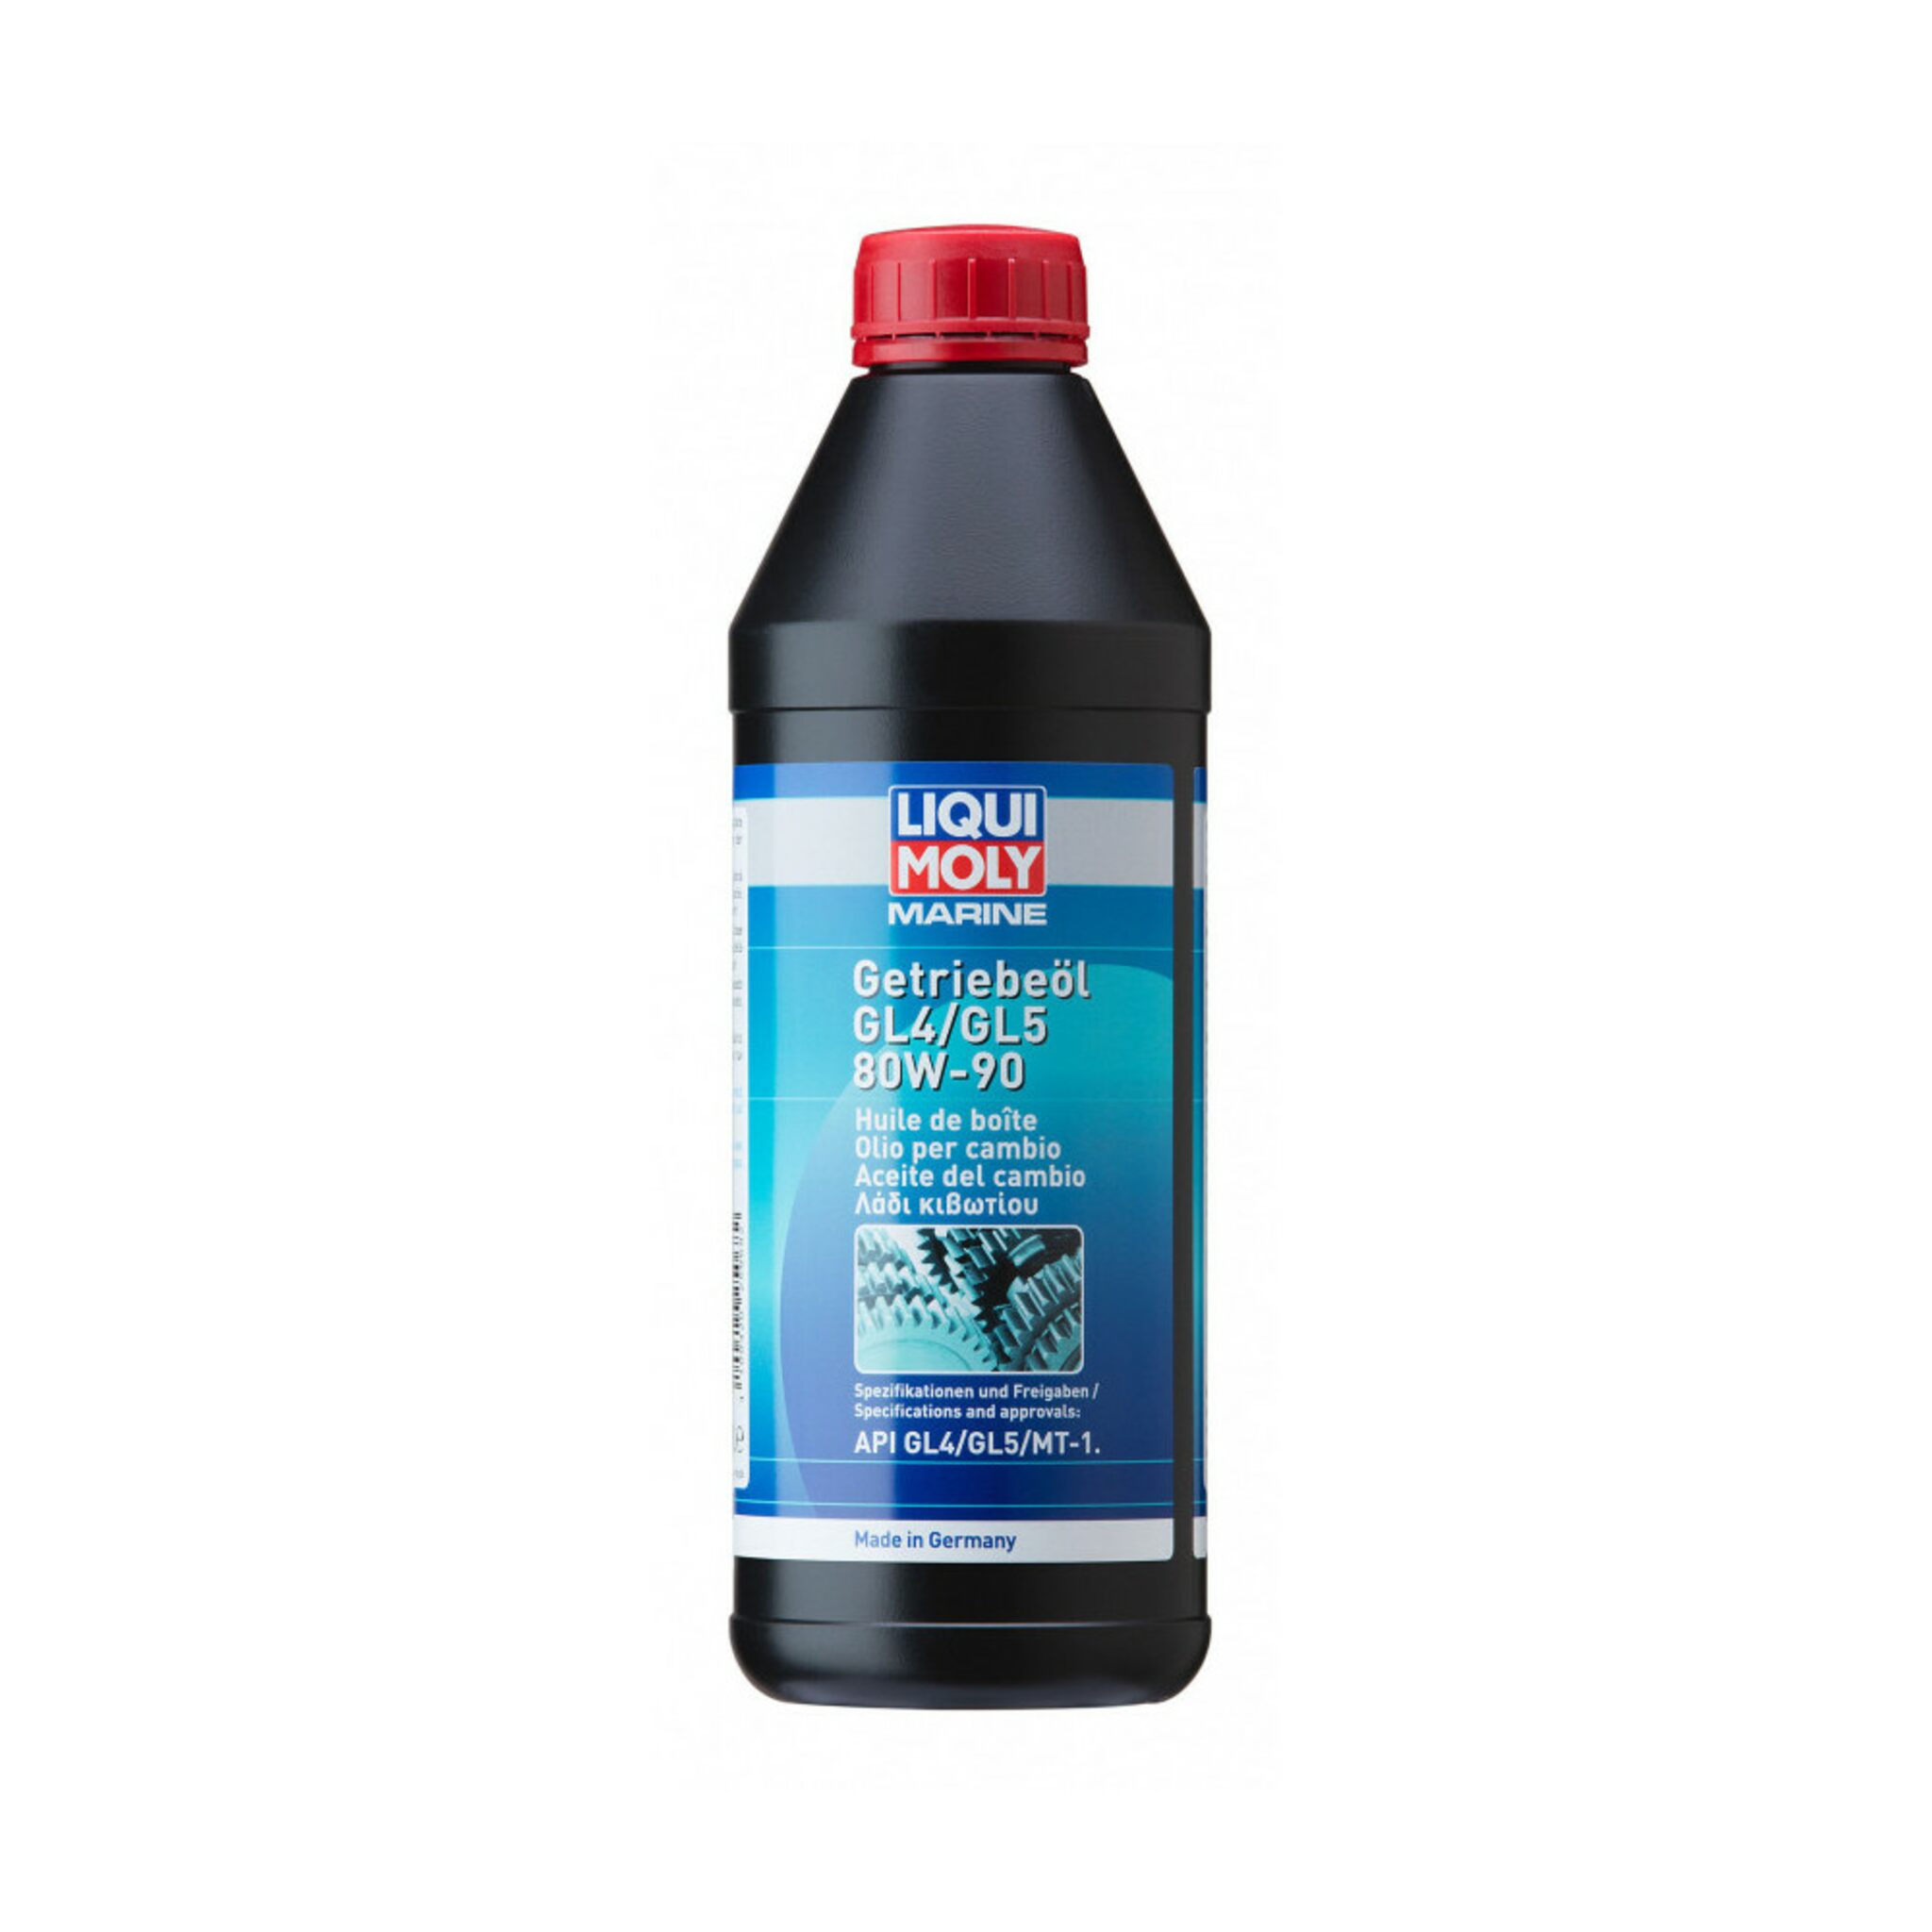 Liqui Moly Marine Gear Oil GL4/GL5 80W-90